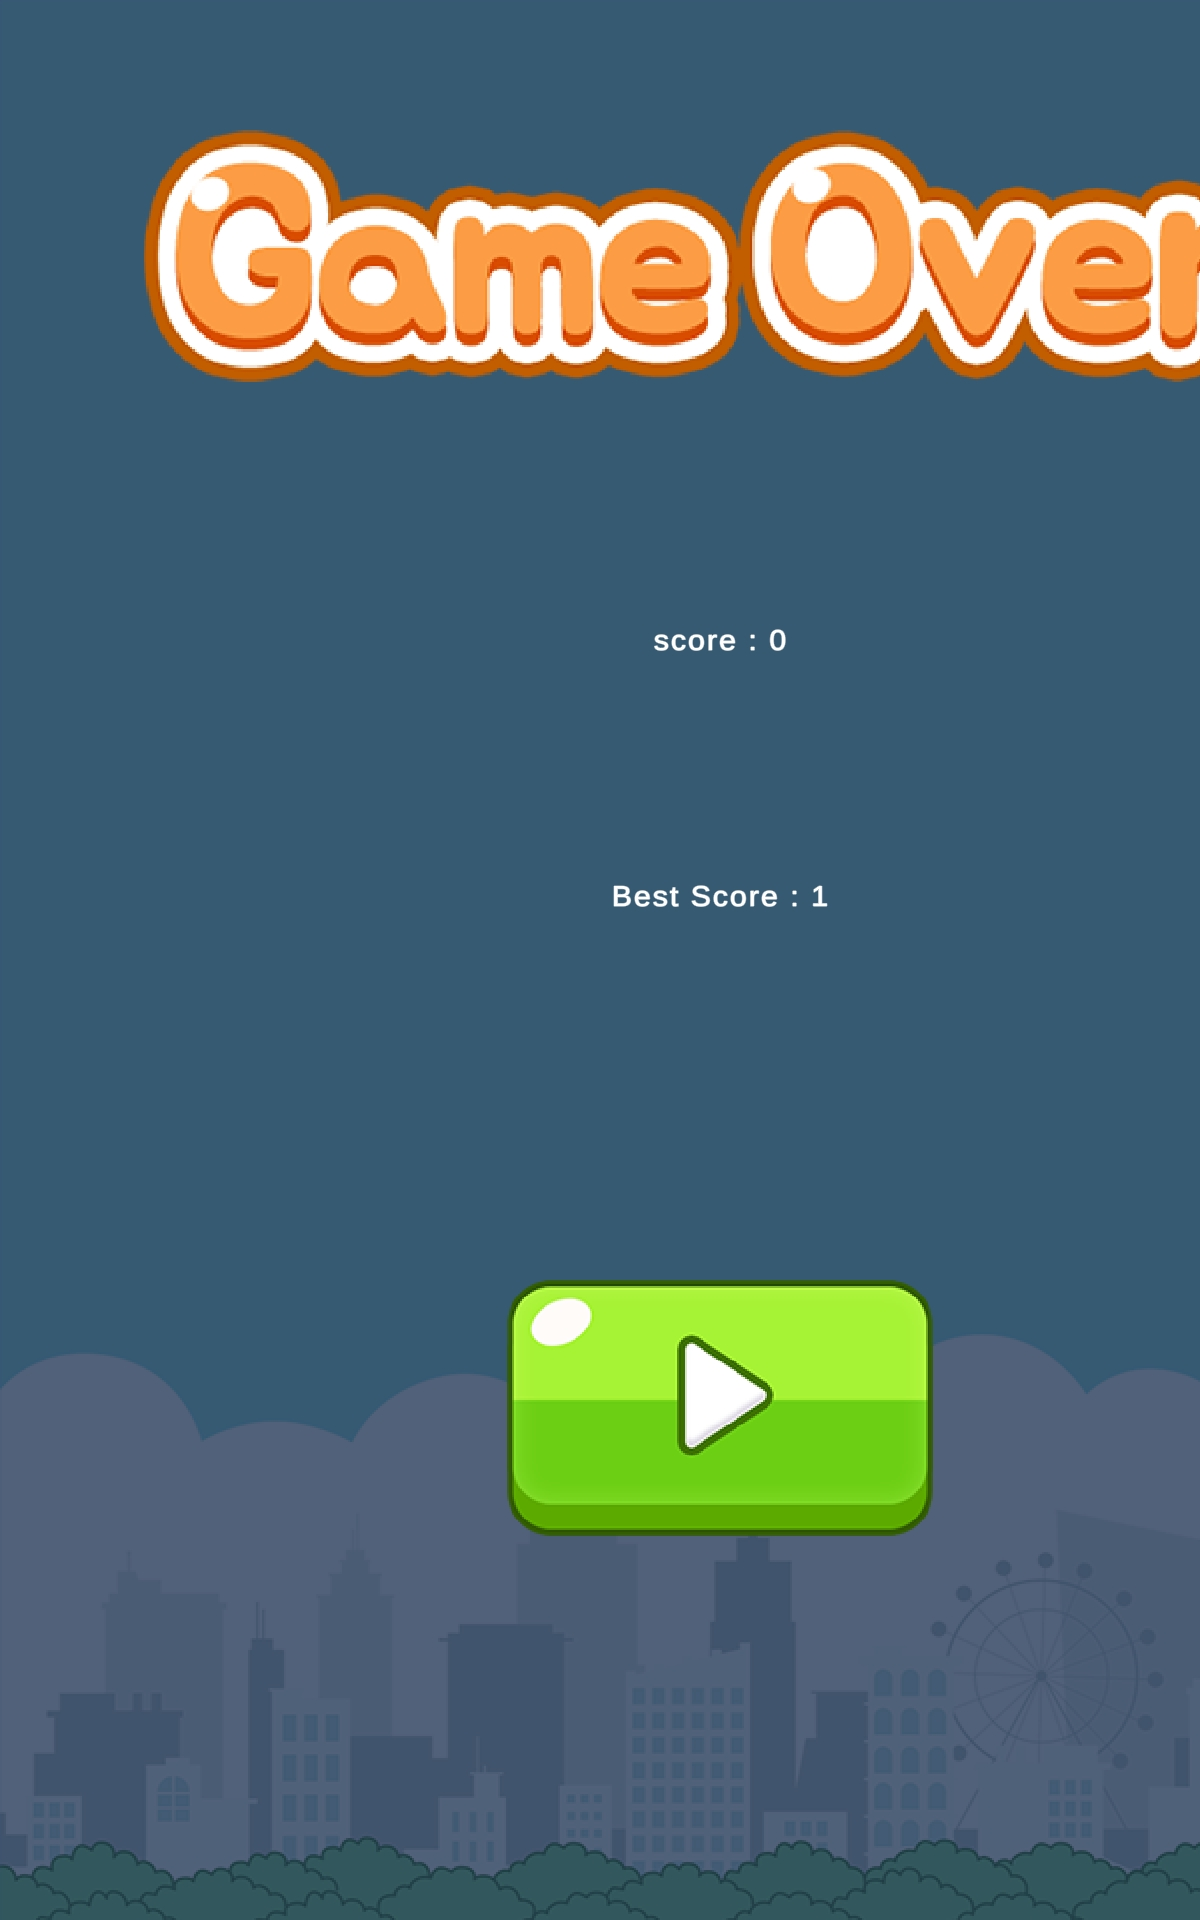 joflappy bird screenshot game